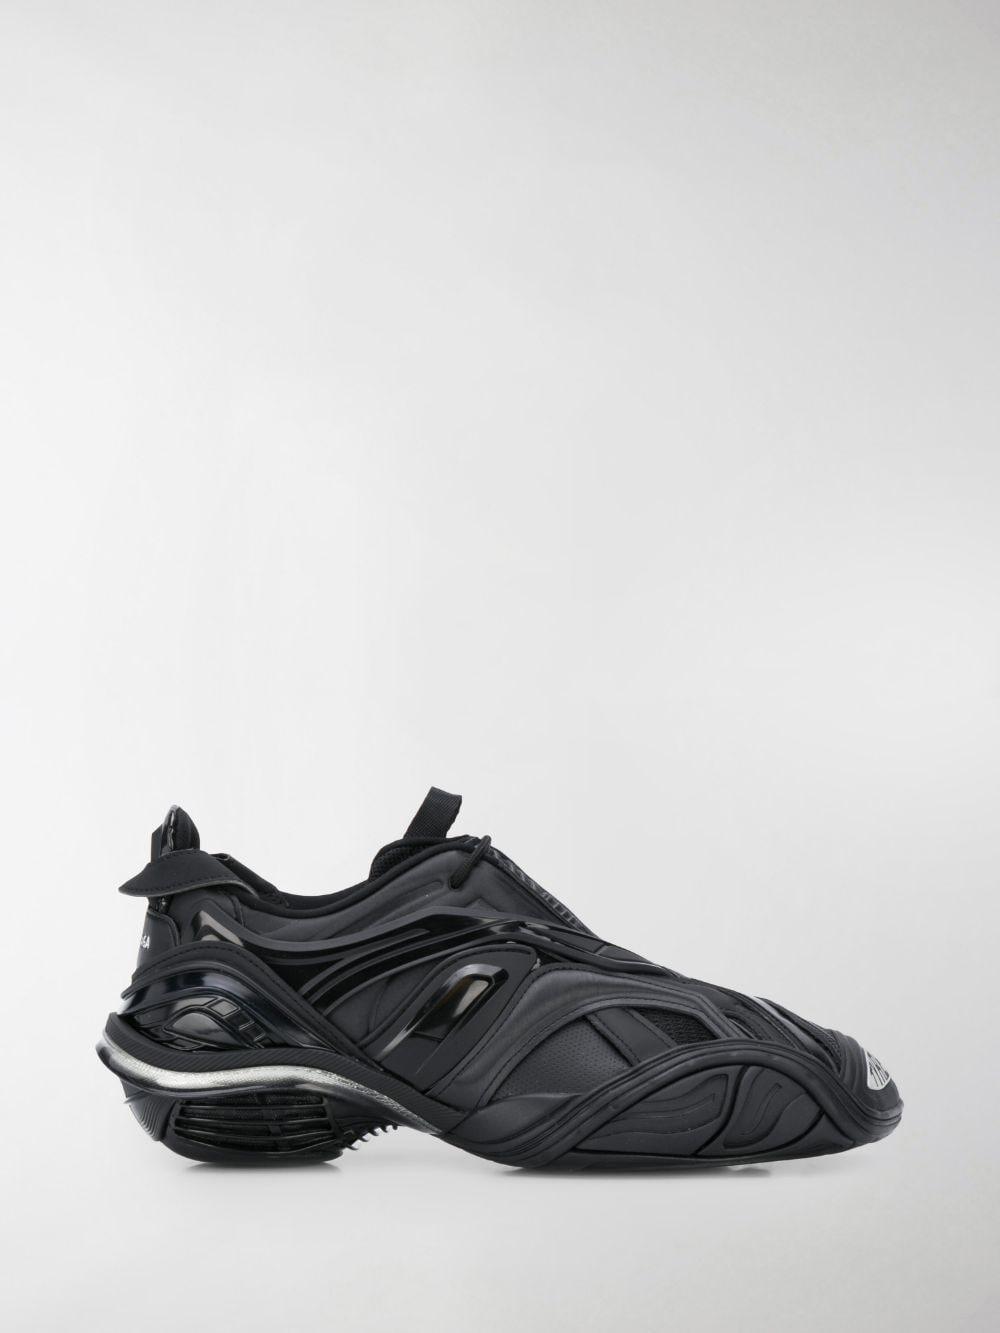 Balenciaga Tyrex Sneakers in Black | Lyst